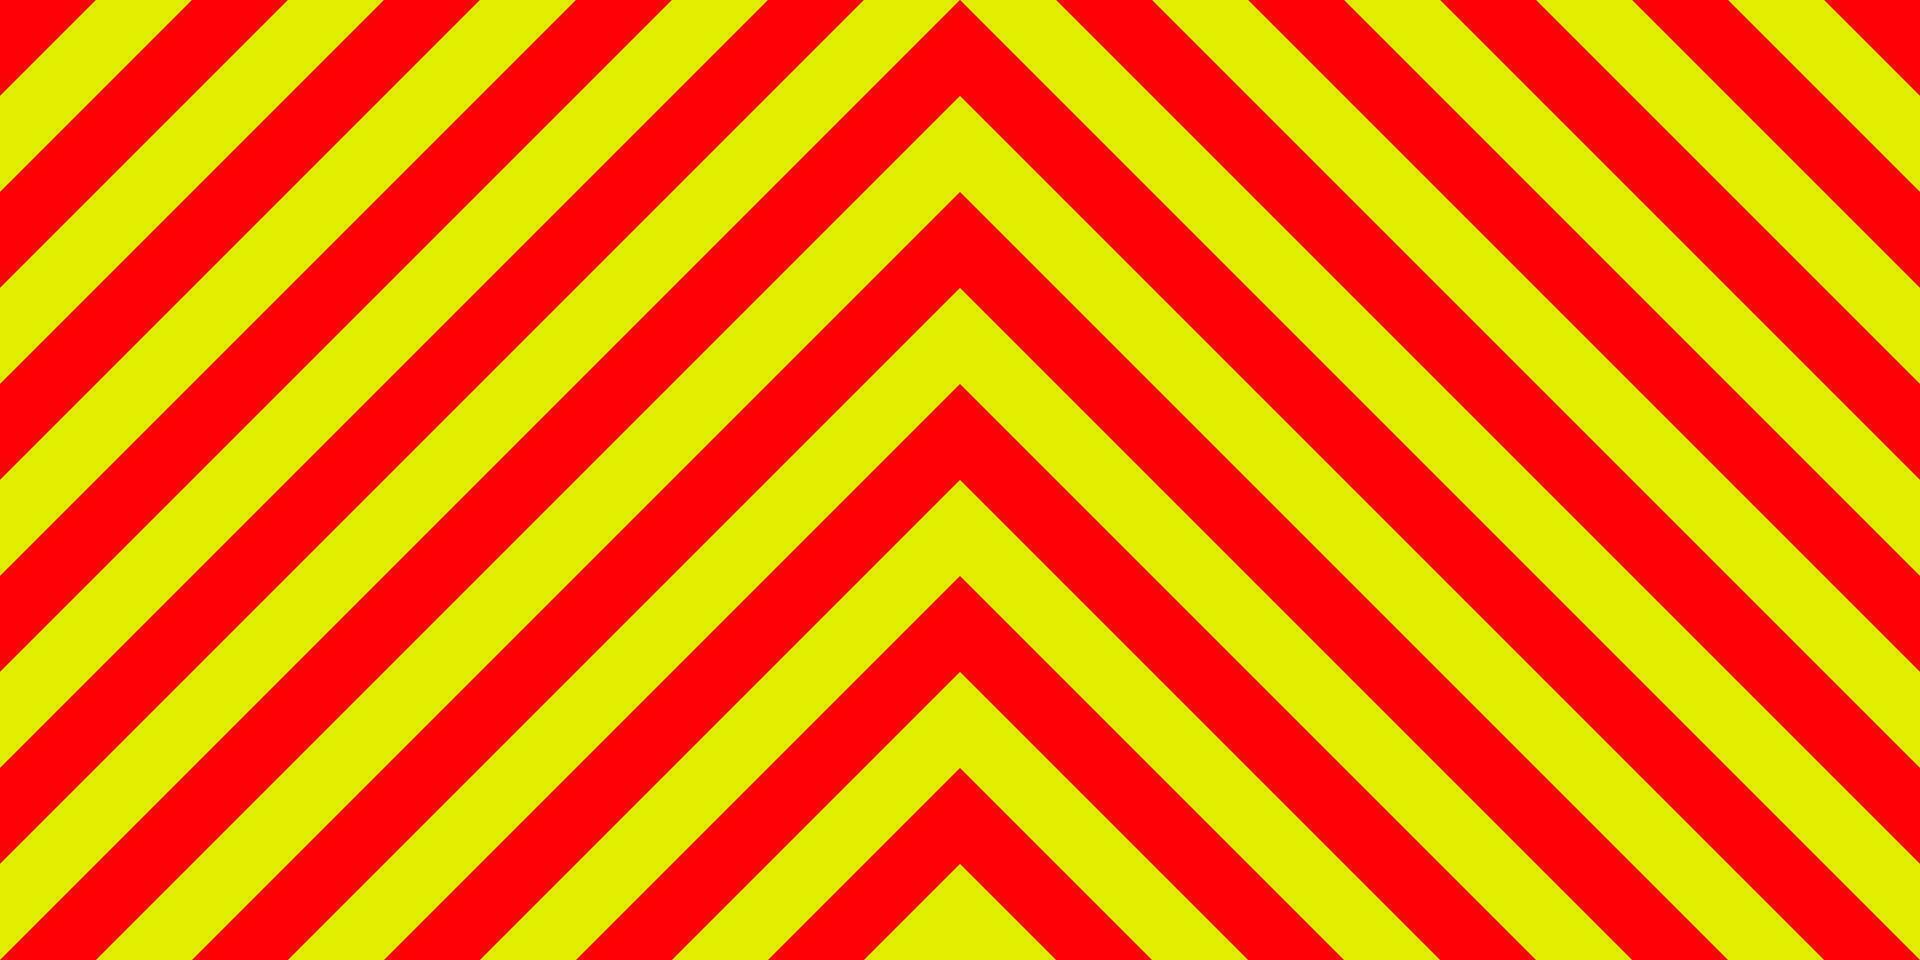 Ambulance emergency sign background yellow red stripes diagonally diagonal stripes vector